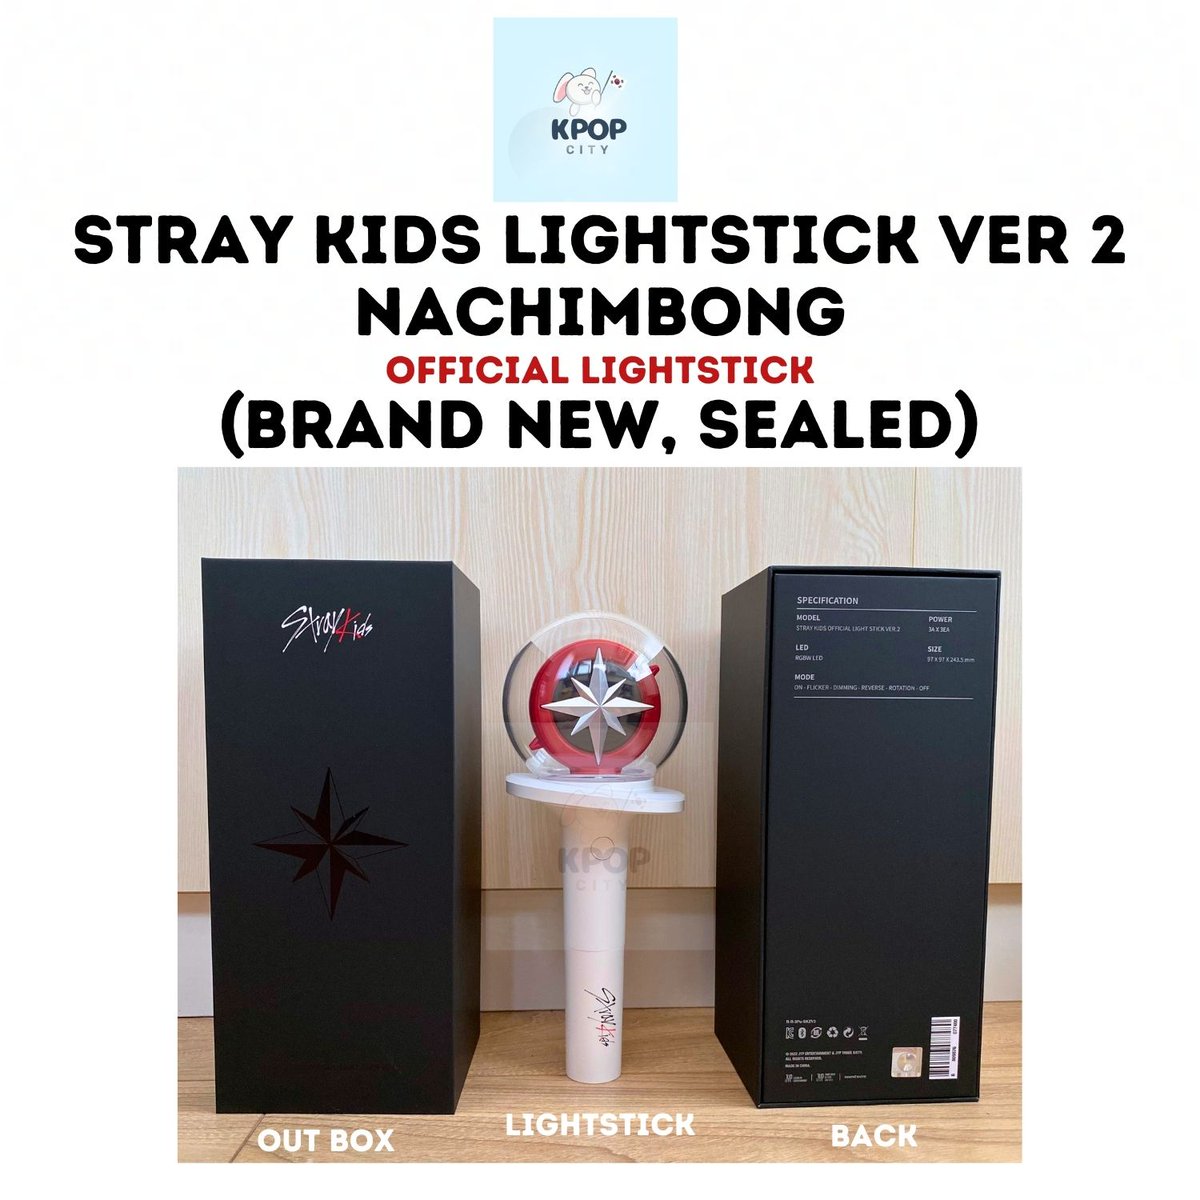 Köp Stray Kids OFFICIELL LIGHT STICKE VER.2